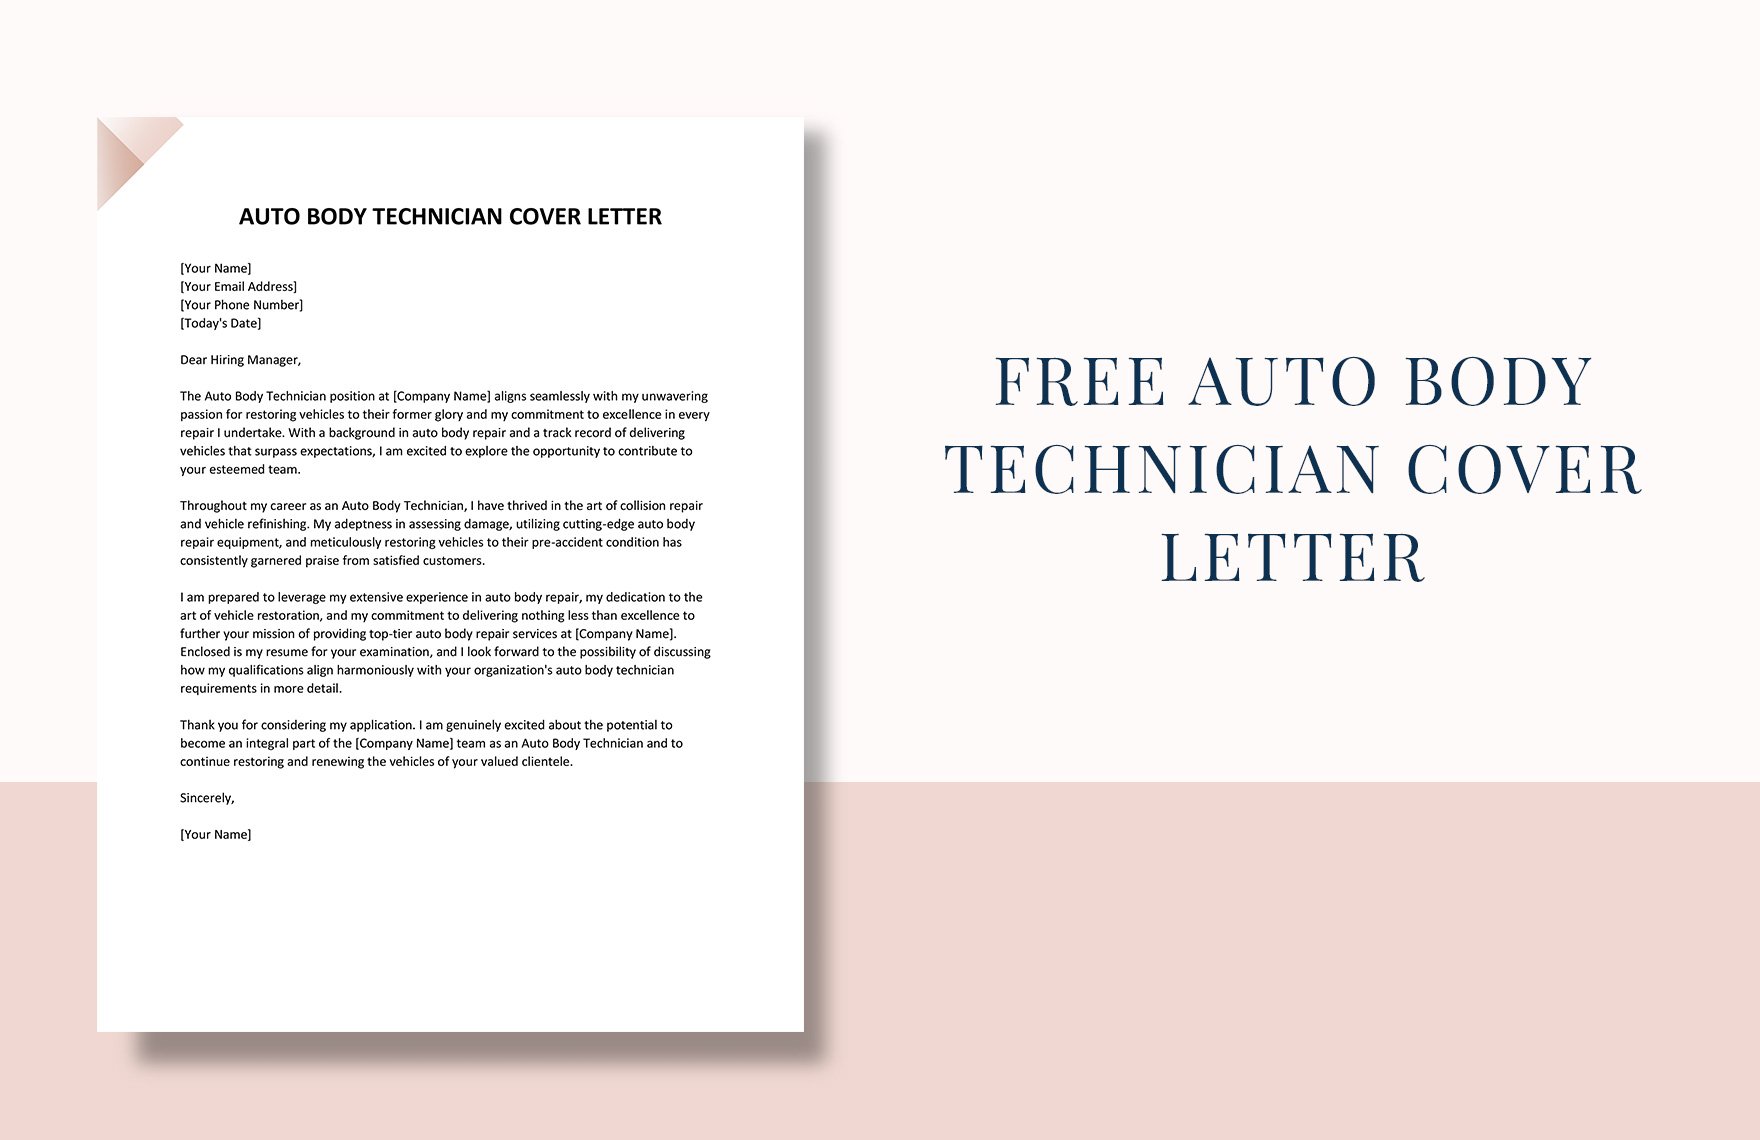 Auto Body Technician Cover Letter in Word, Google Docs